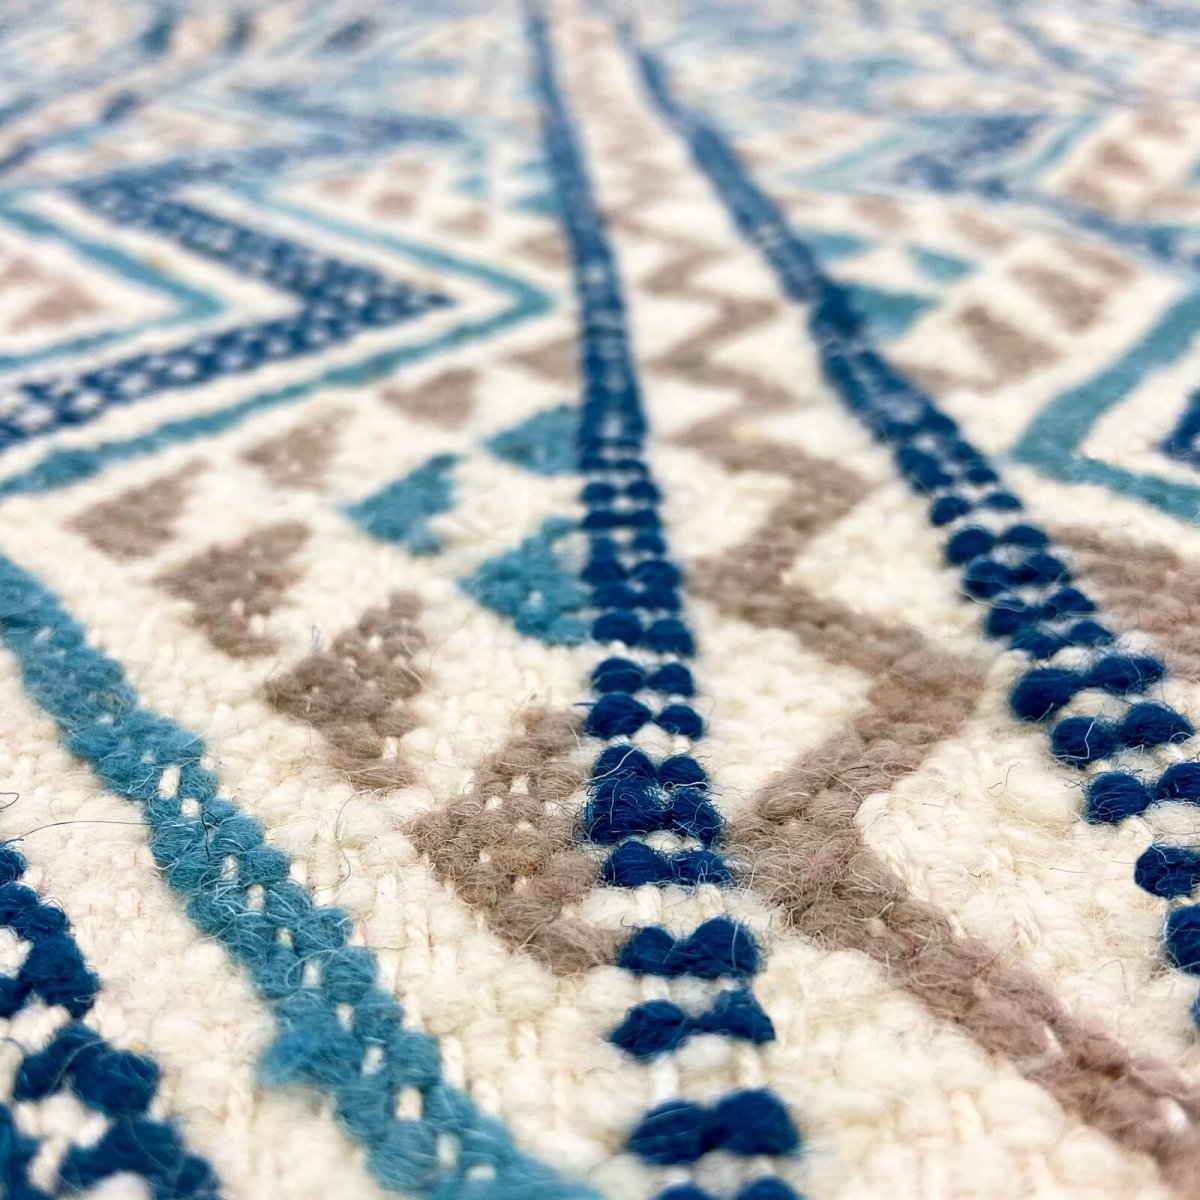 Berber carpet Rug Margoum 120x190 Blue/White | Handmade, Wool, Tunisia Tunisian margoum rug from the city of Kairouan. Rectangul